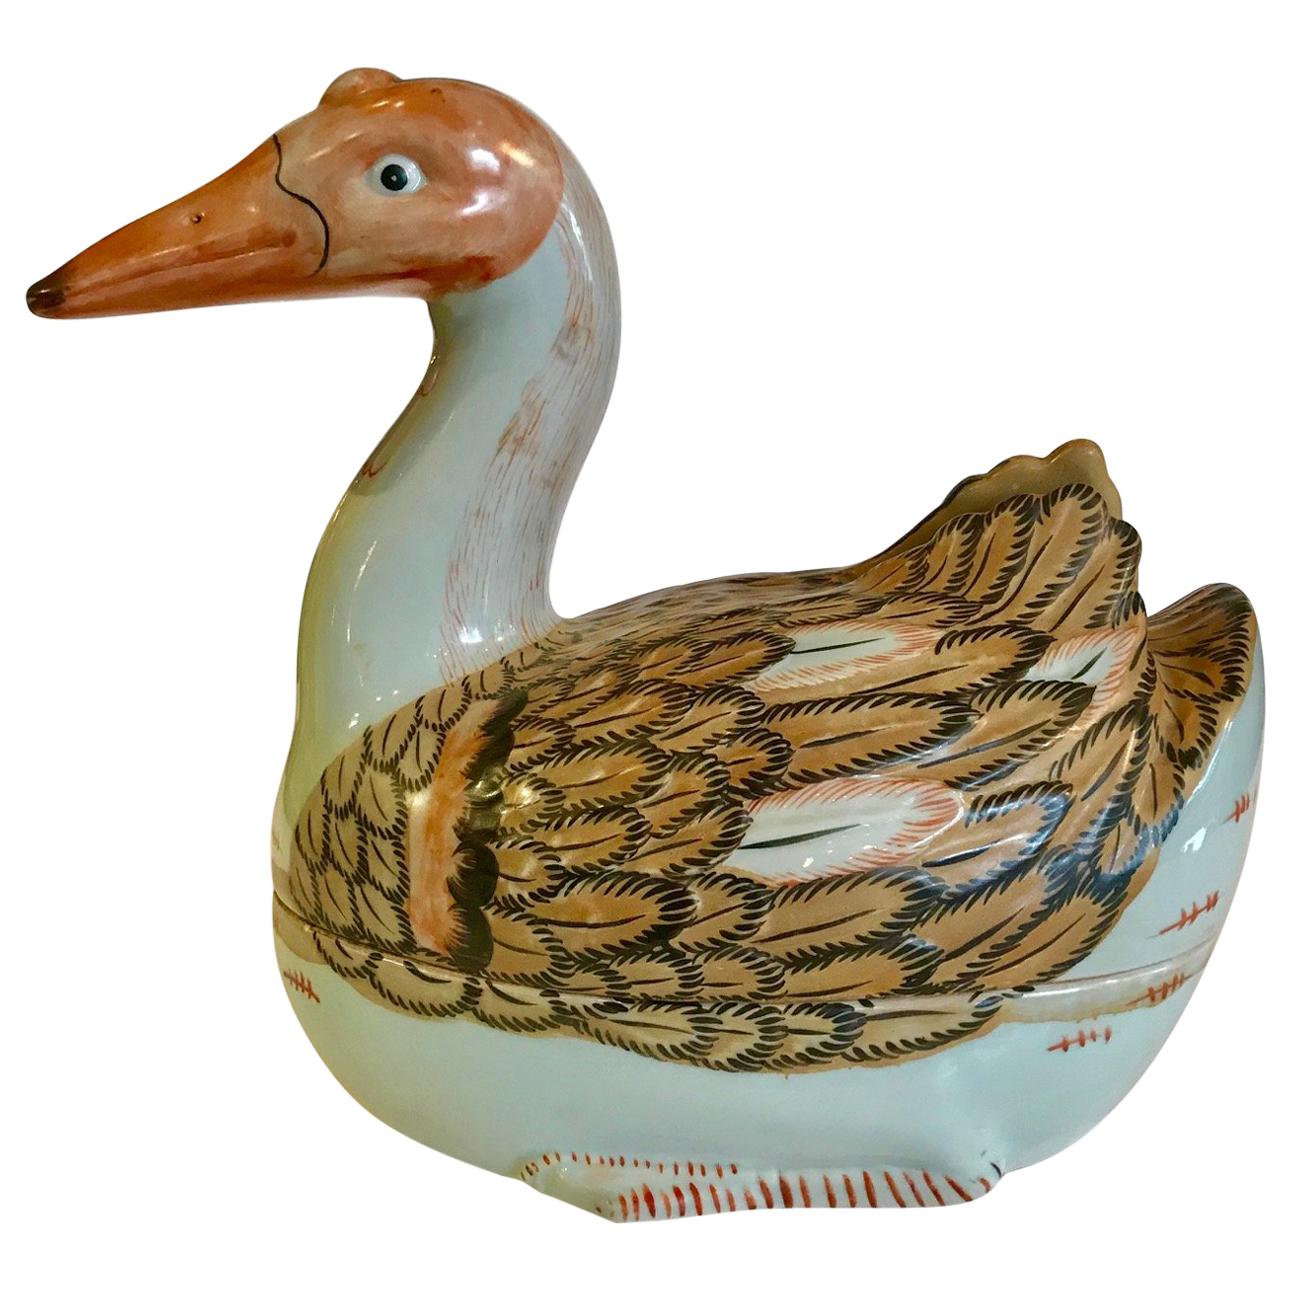 Wonderful Duck Shaped Chinese Hand-Painted Tureen